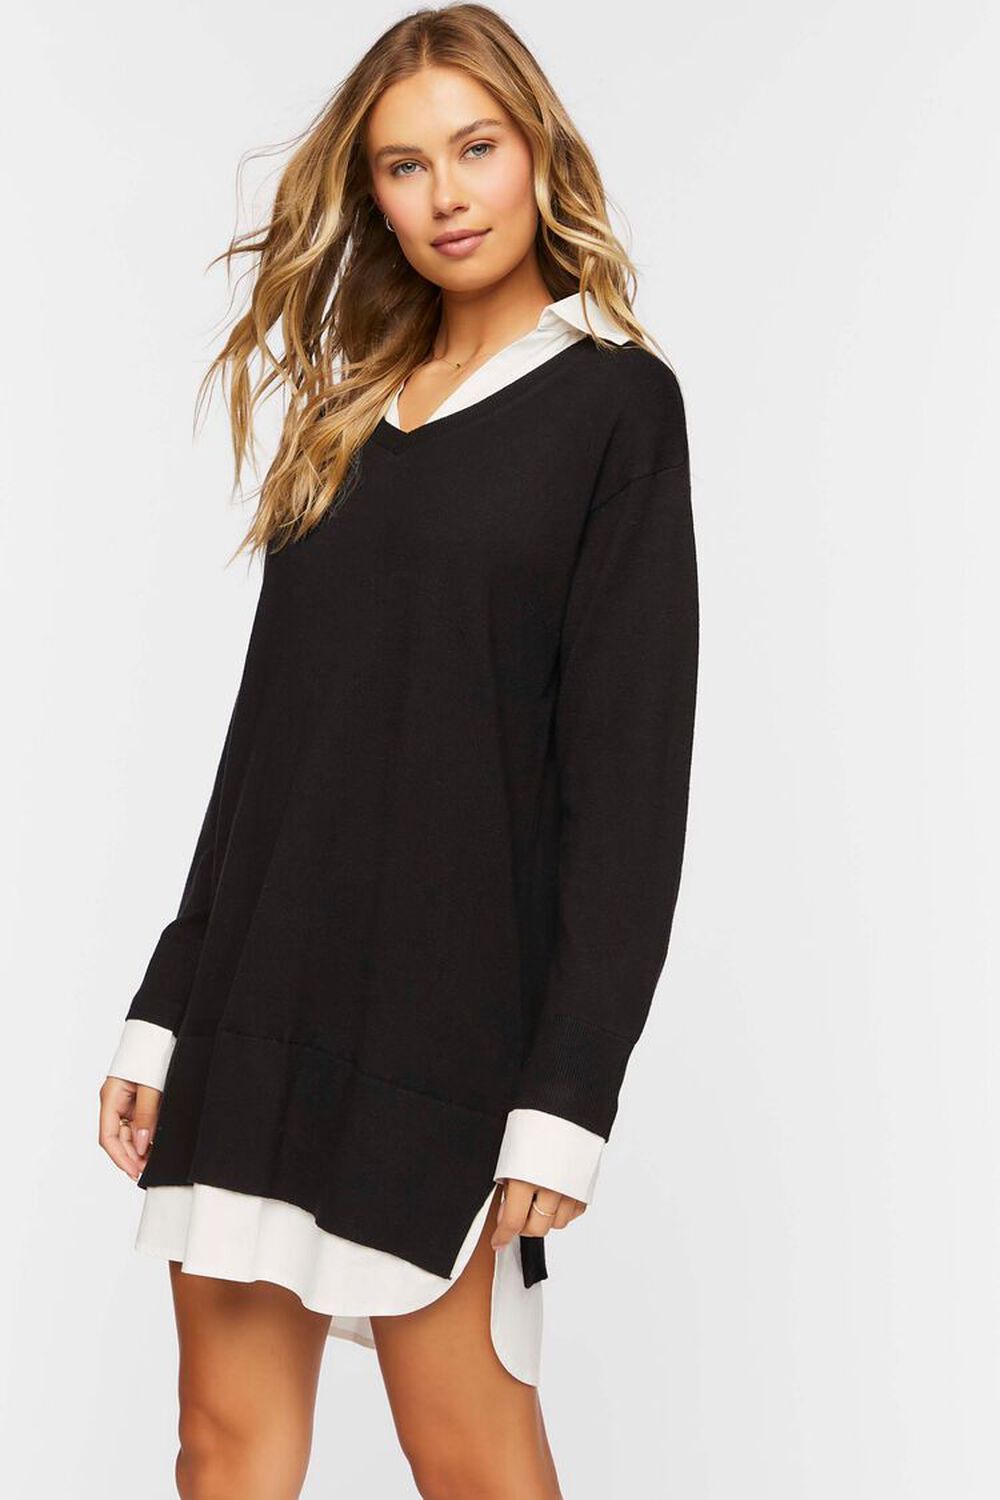 BLACK/WHITE Combo Sweater Shirt Dress, image 1